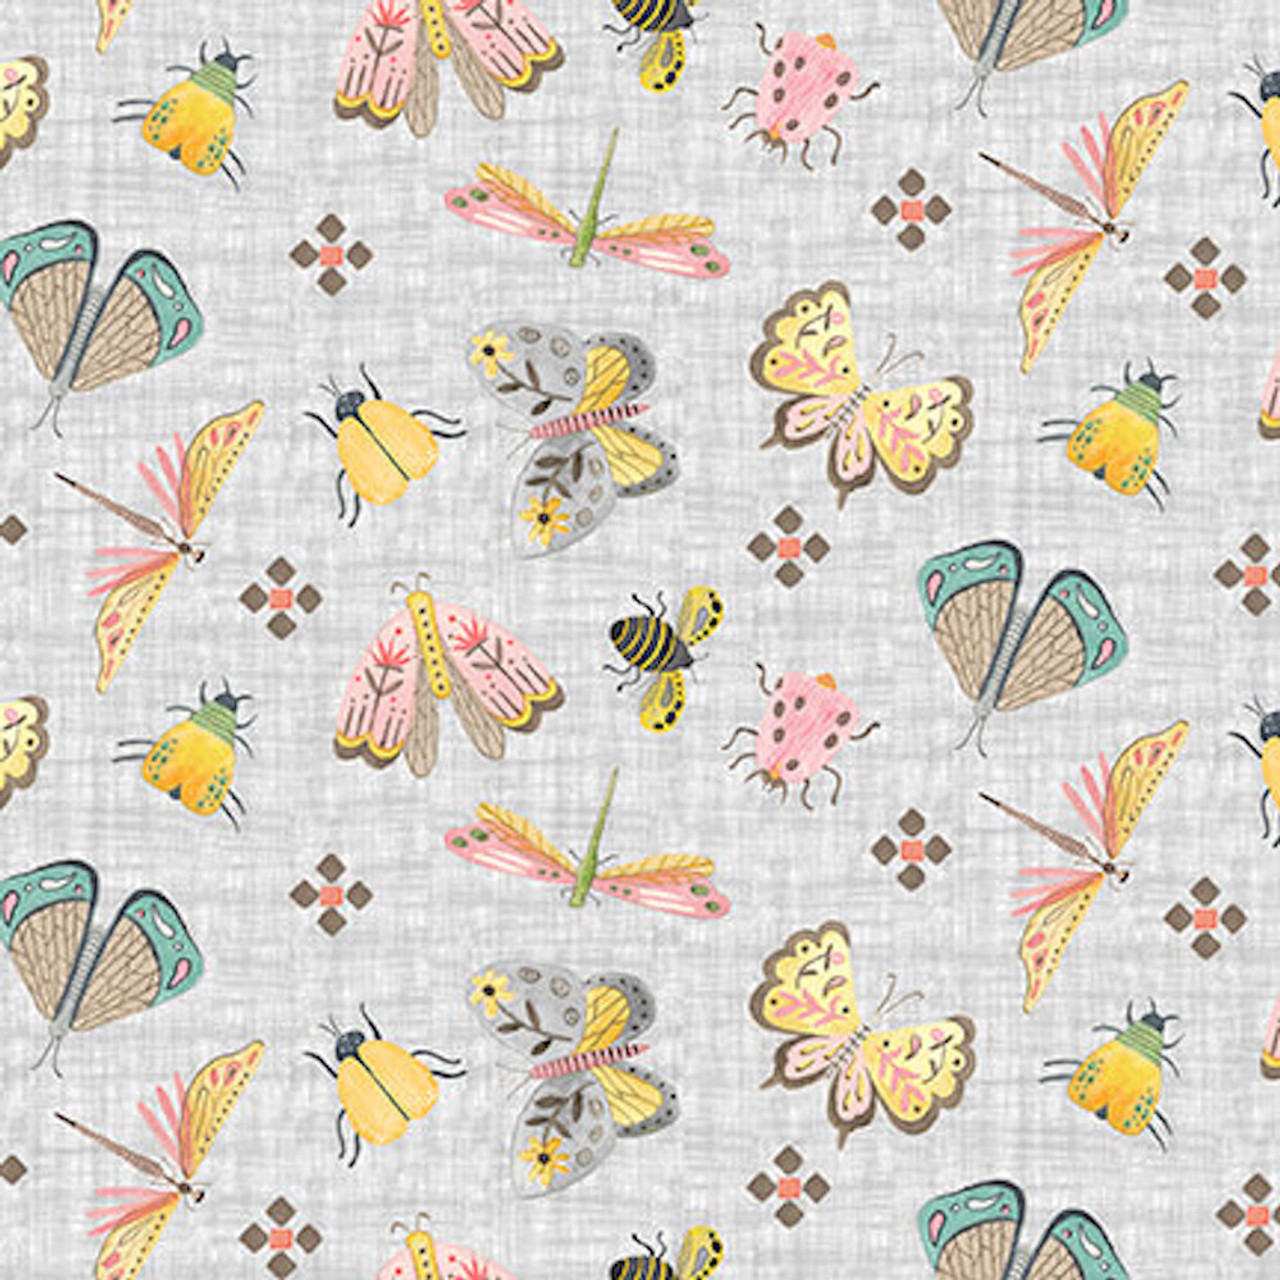 Blank Quilting Folk Gardn Butterflies & Bugs Cotton Fabric By The Yard